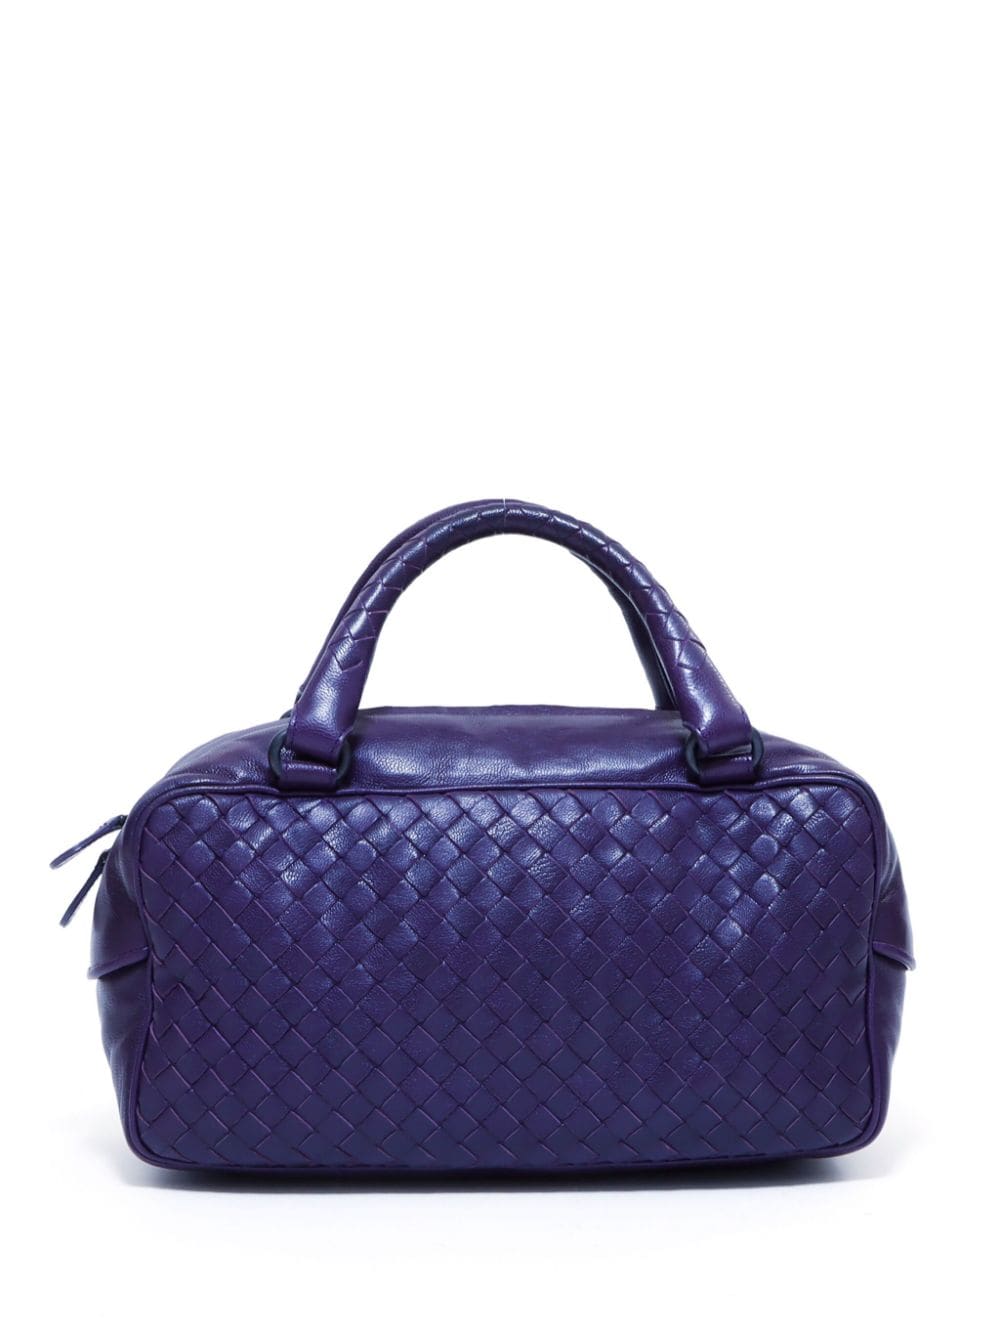 Pre-owned Bottega Veneta Intrecciato Leather Handbag In Purple